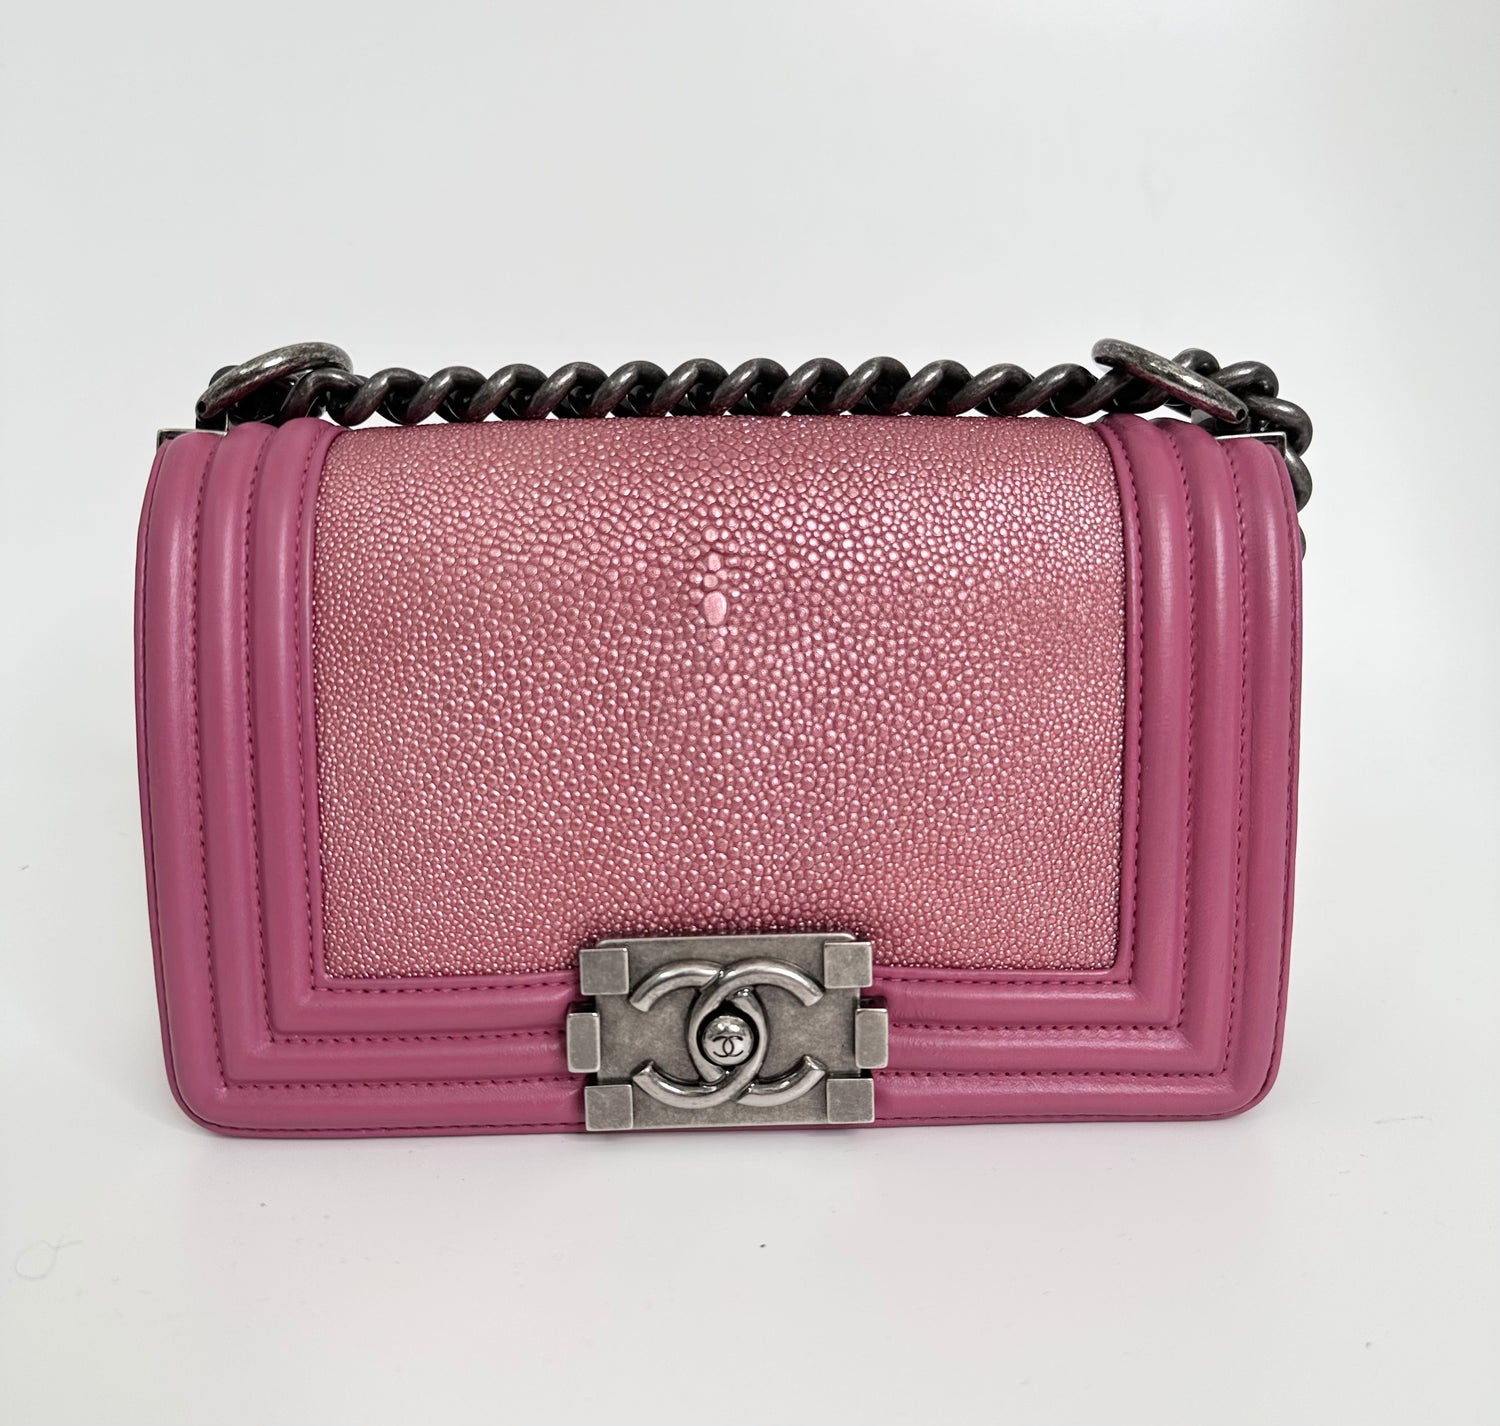 Chanel Pink Leather Le Boy Bag